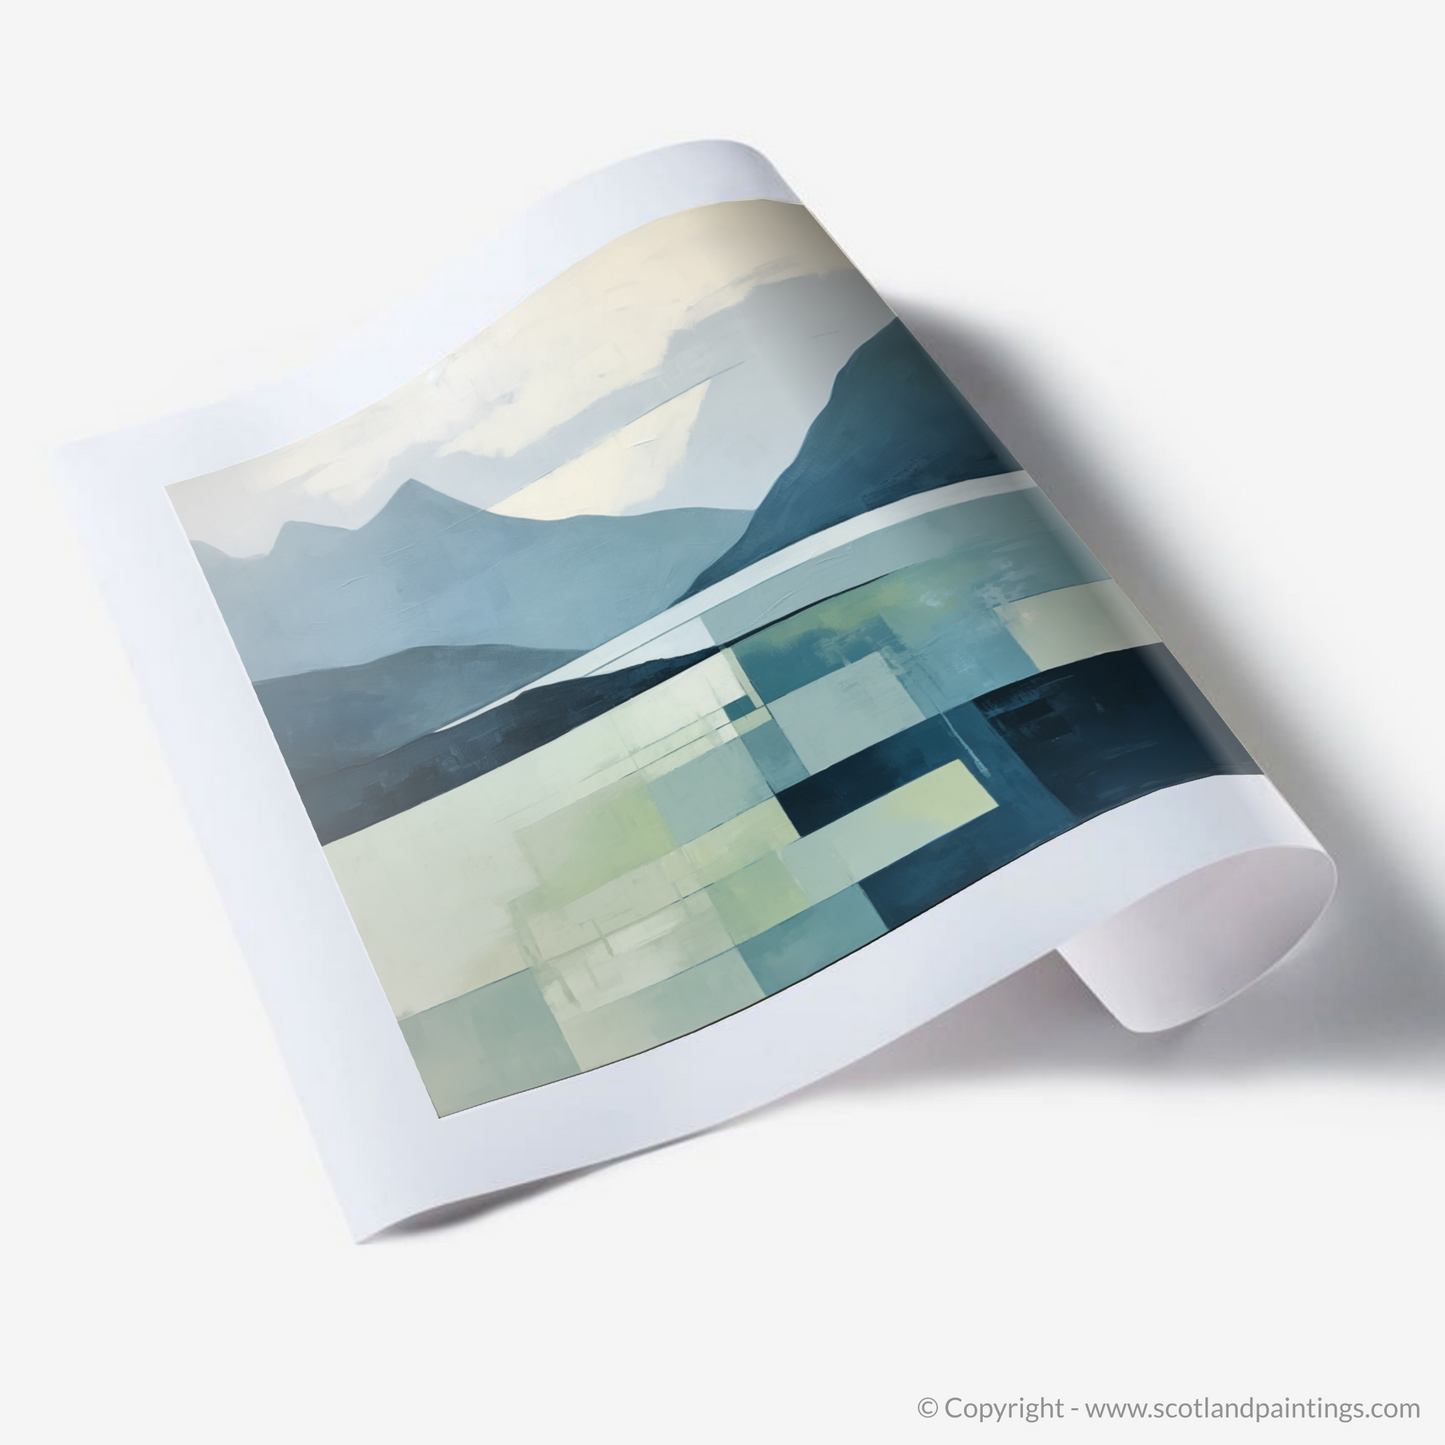 Loch Maree Reimagined: A Modern Minimalist Vision